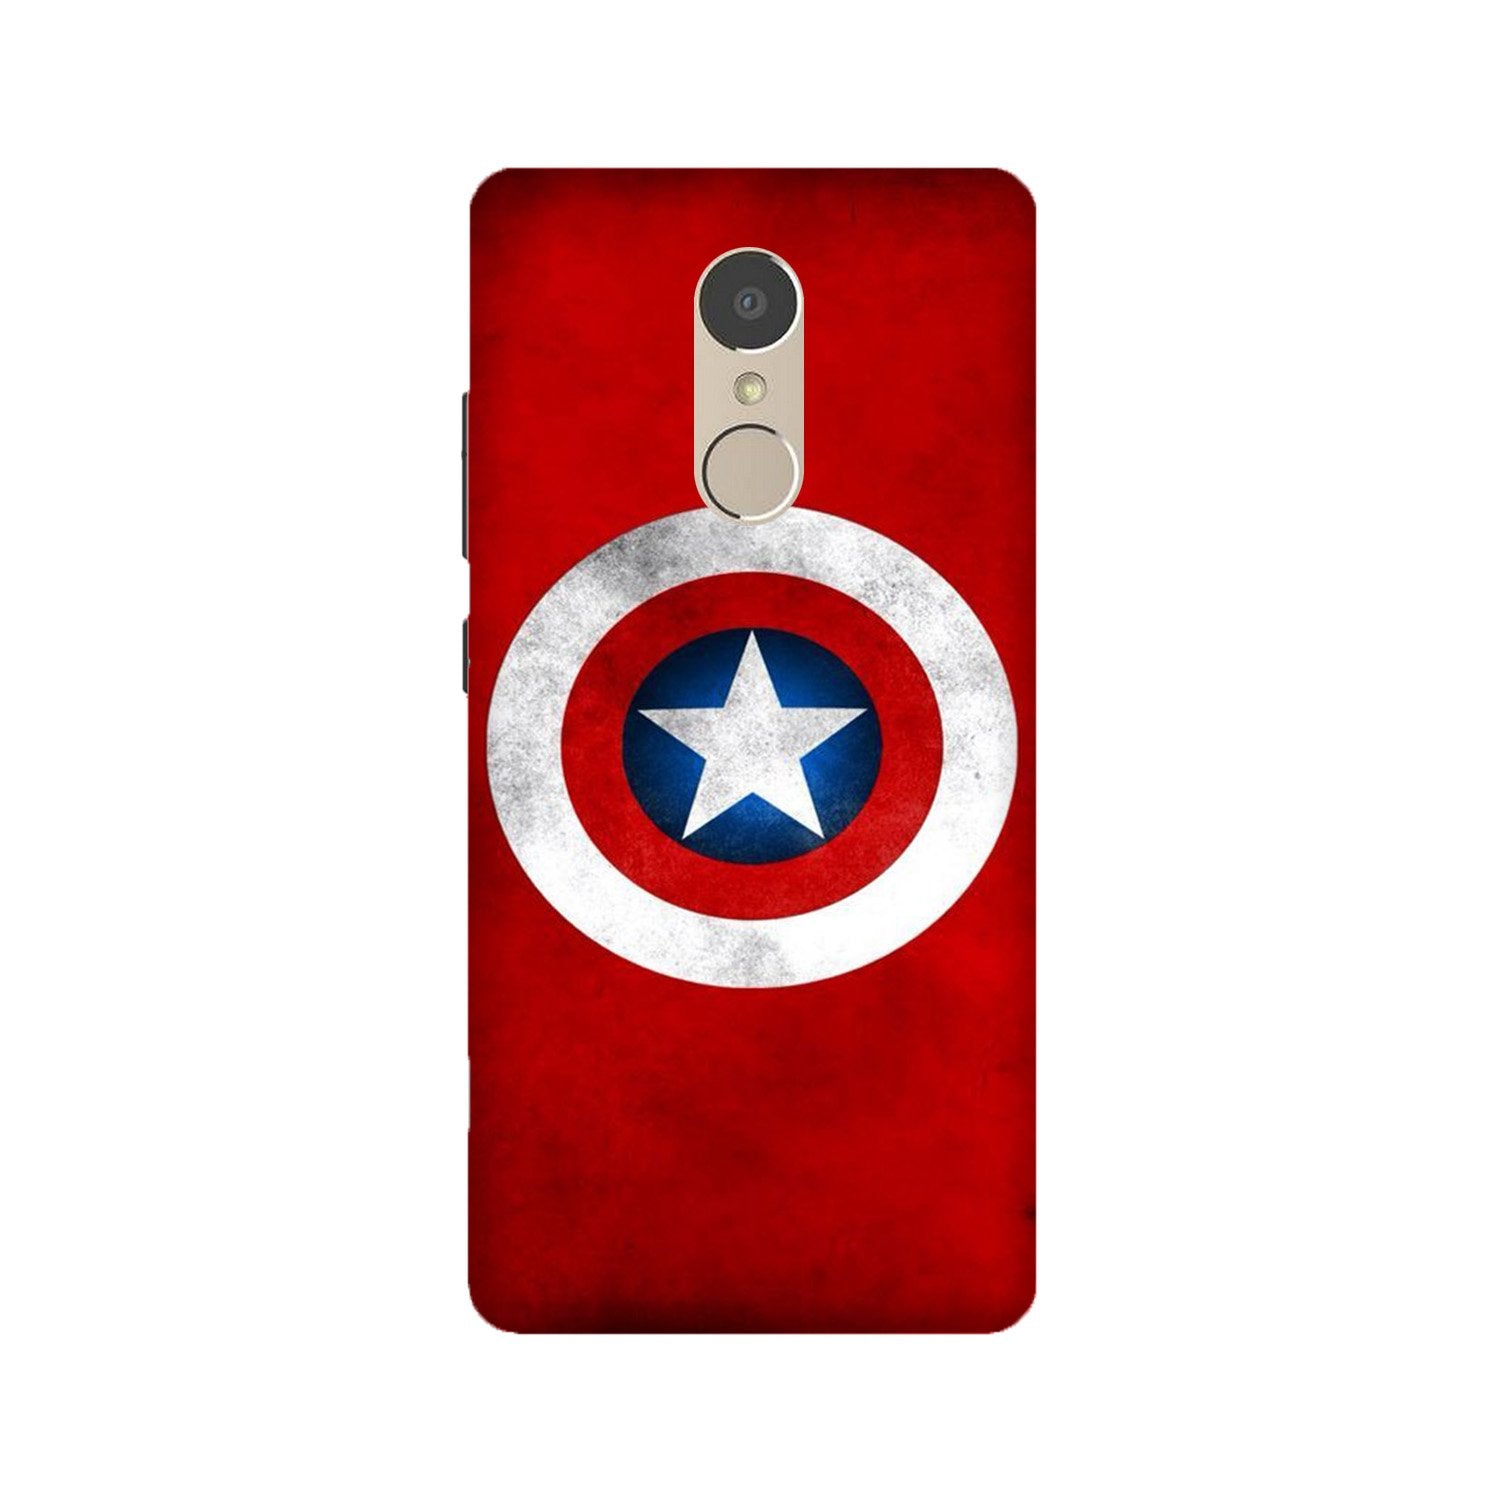 Captain America Case for Lenovo K6 Note (Design No. 249)